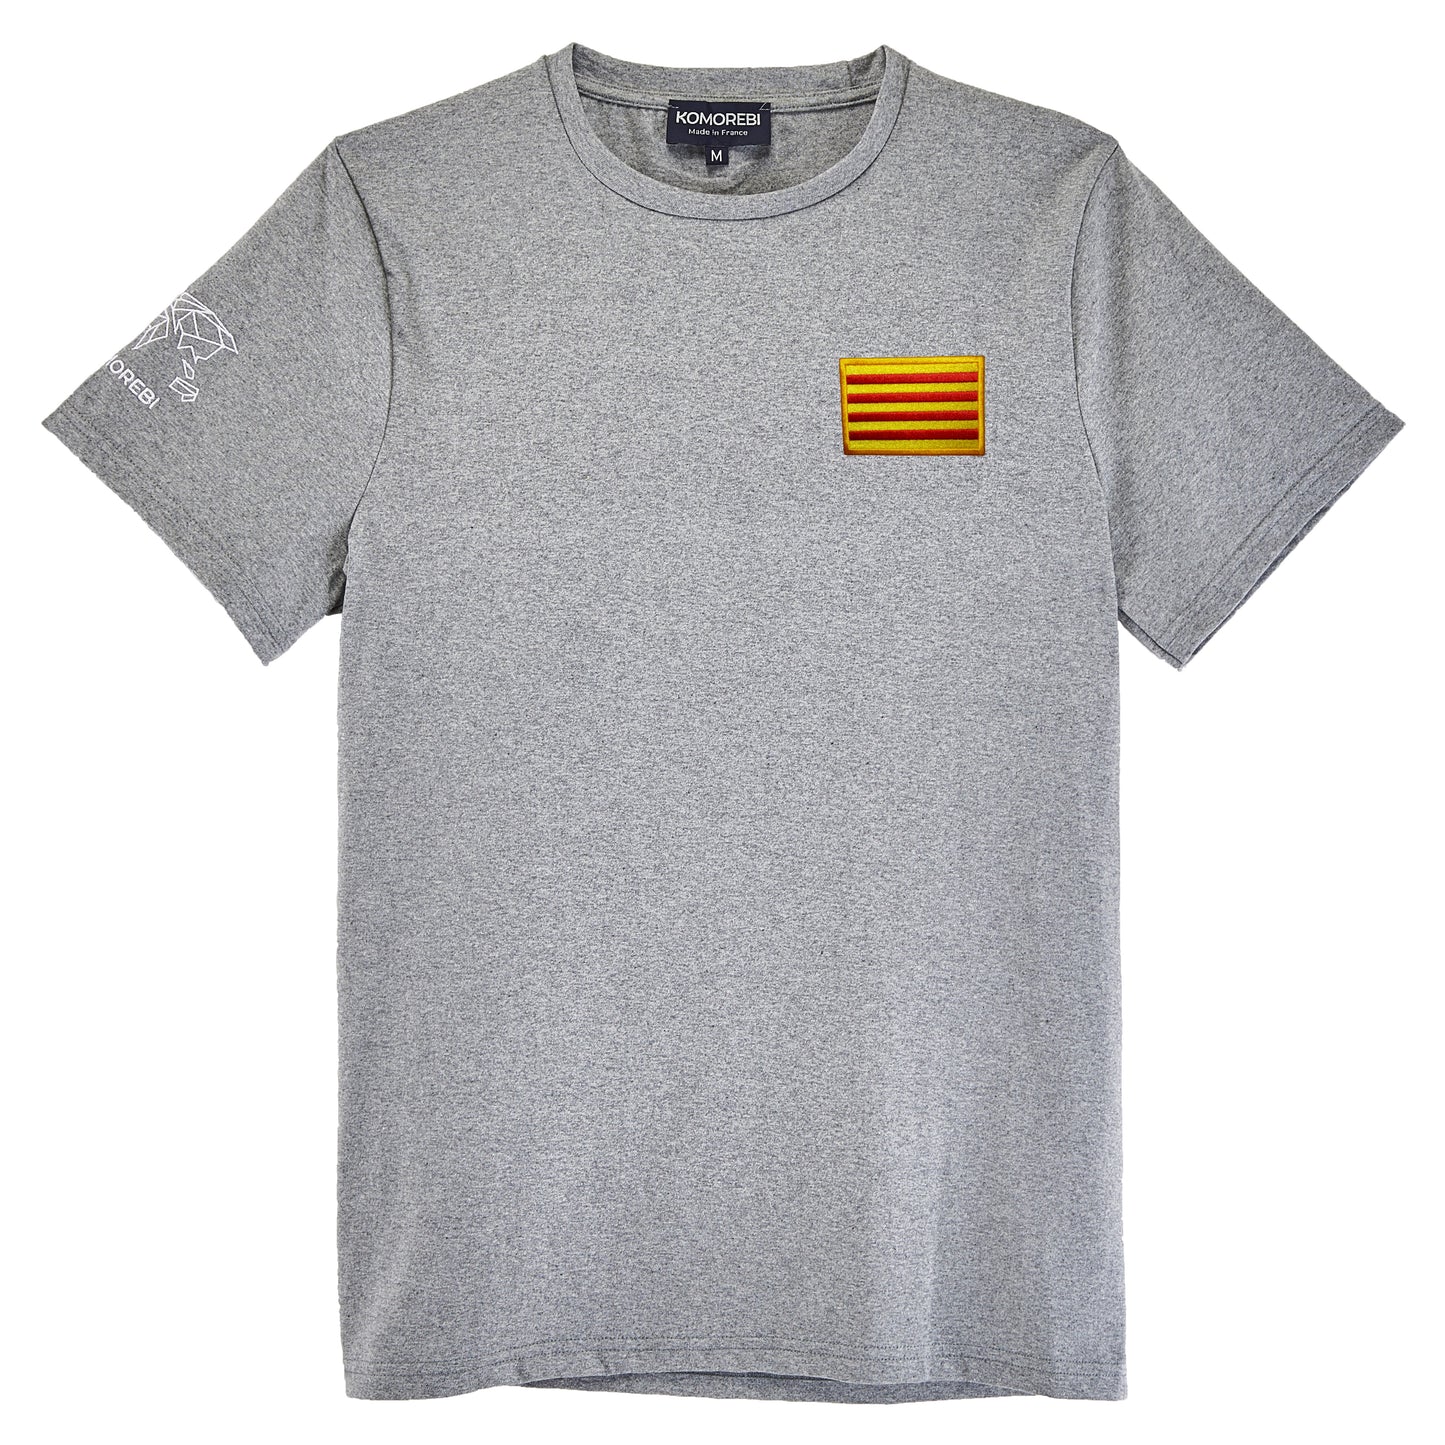 Catalogne • T-shirt